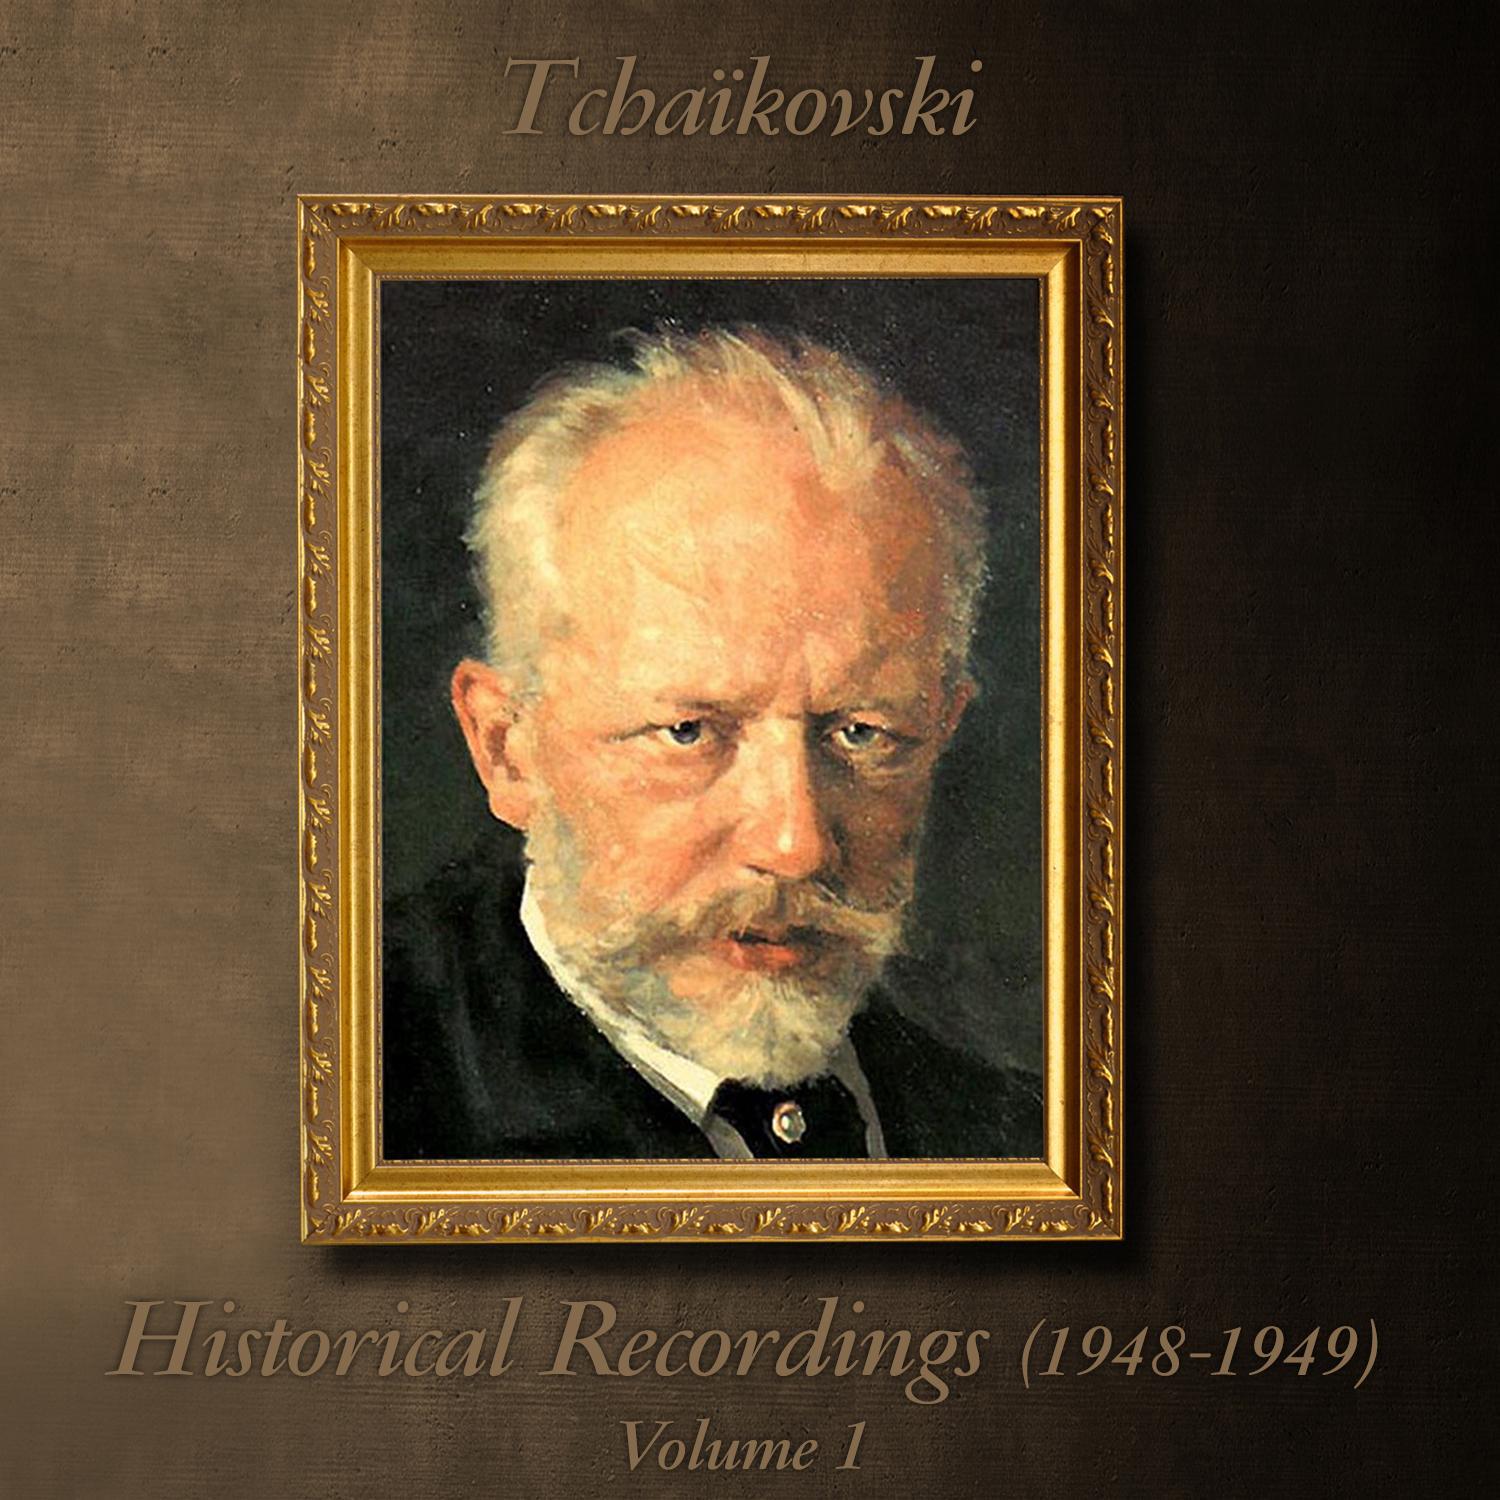 Tcha kovski : Historical Recordings 1948  1949, Volume 1